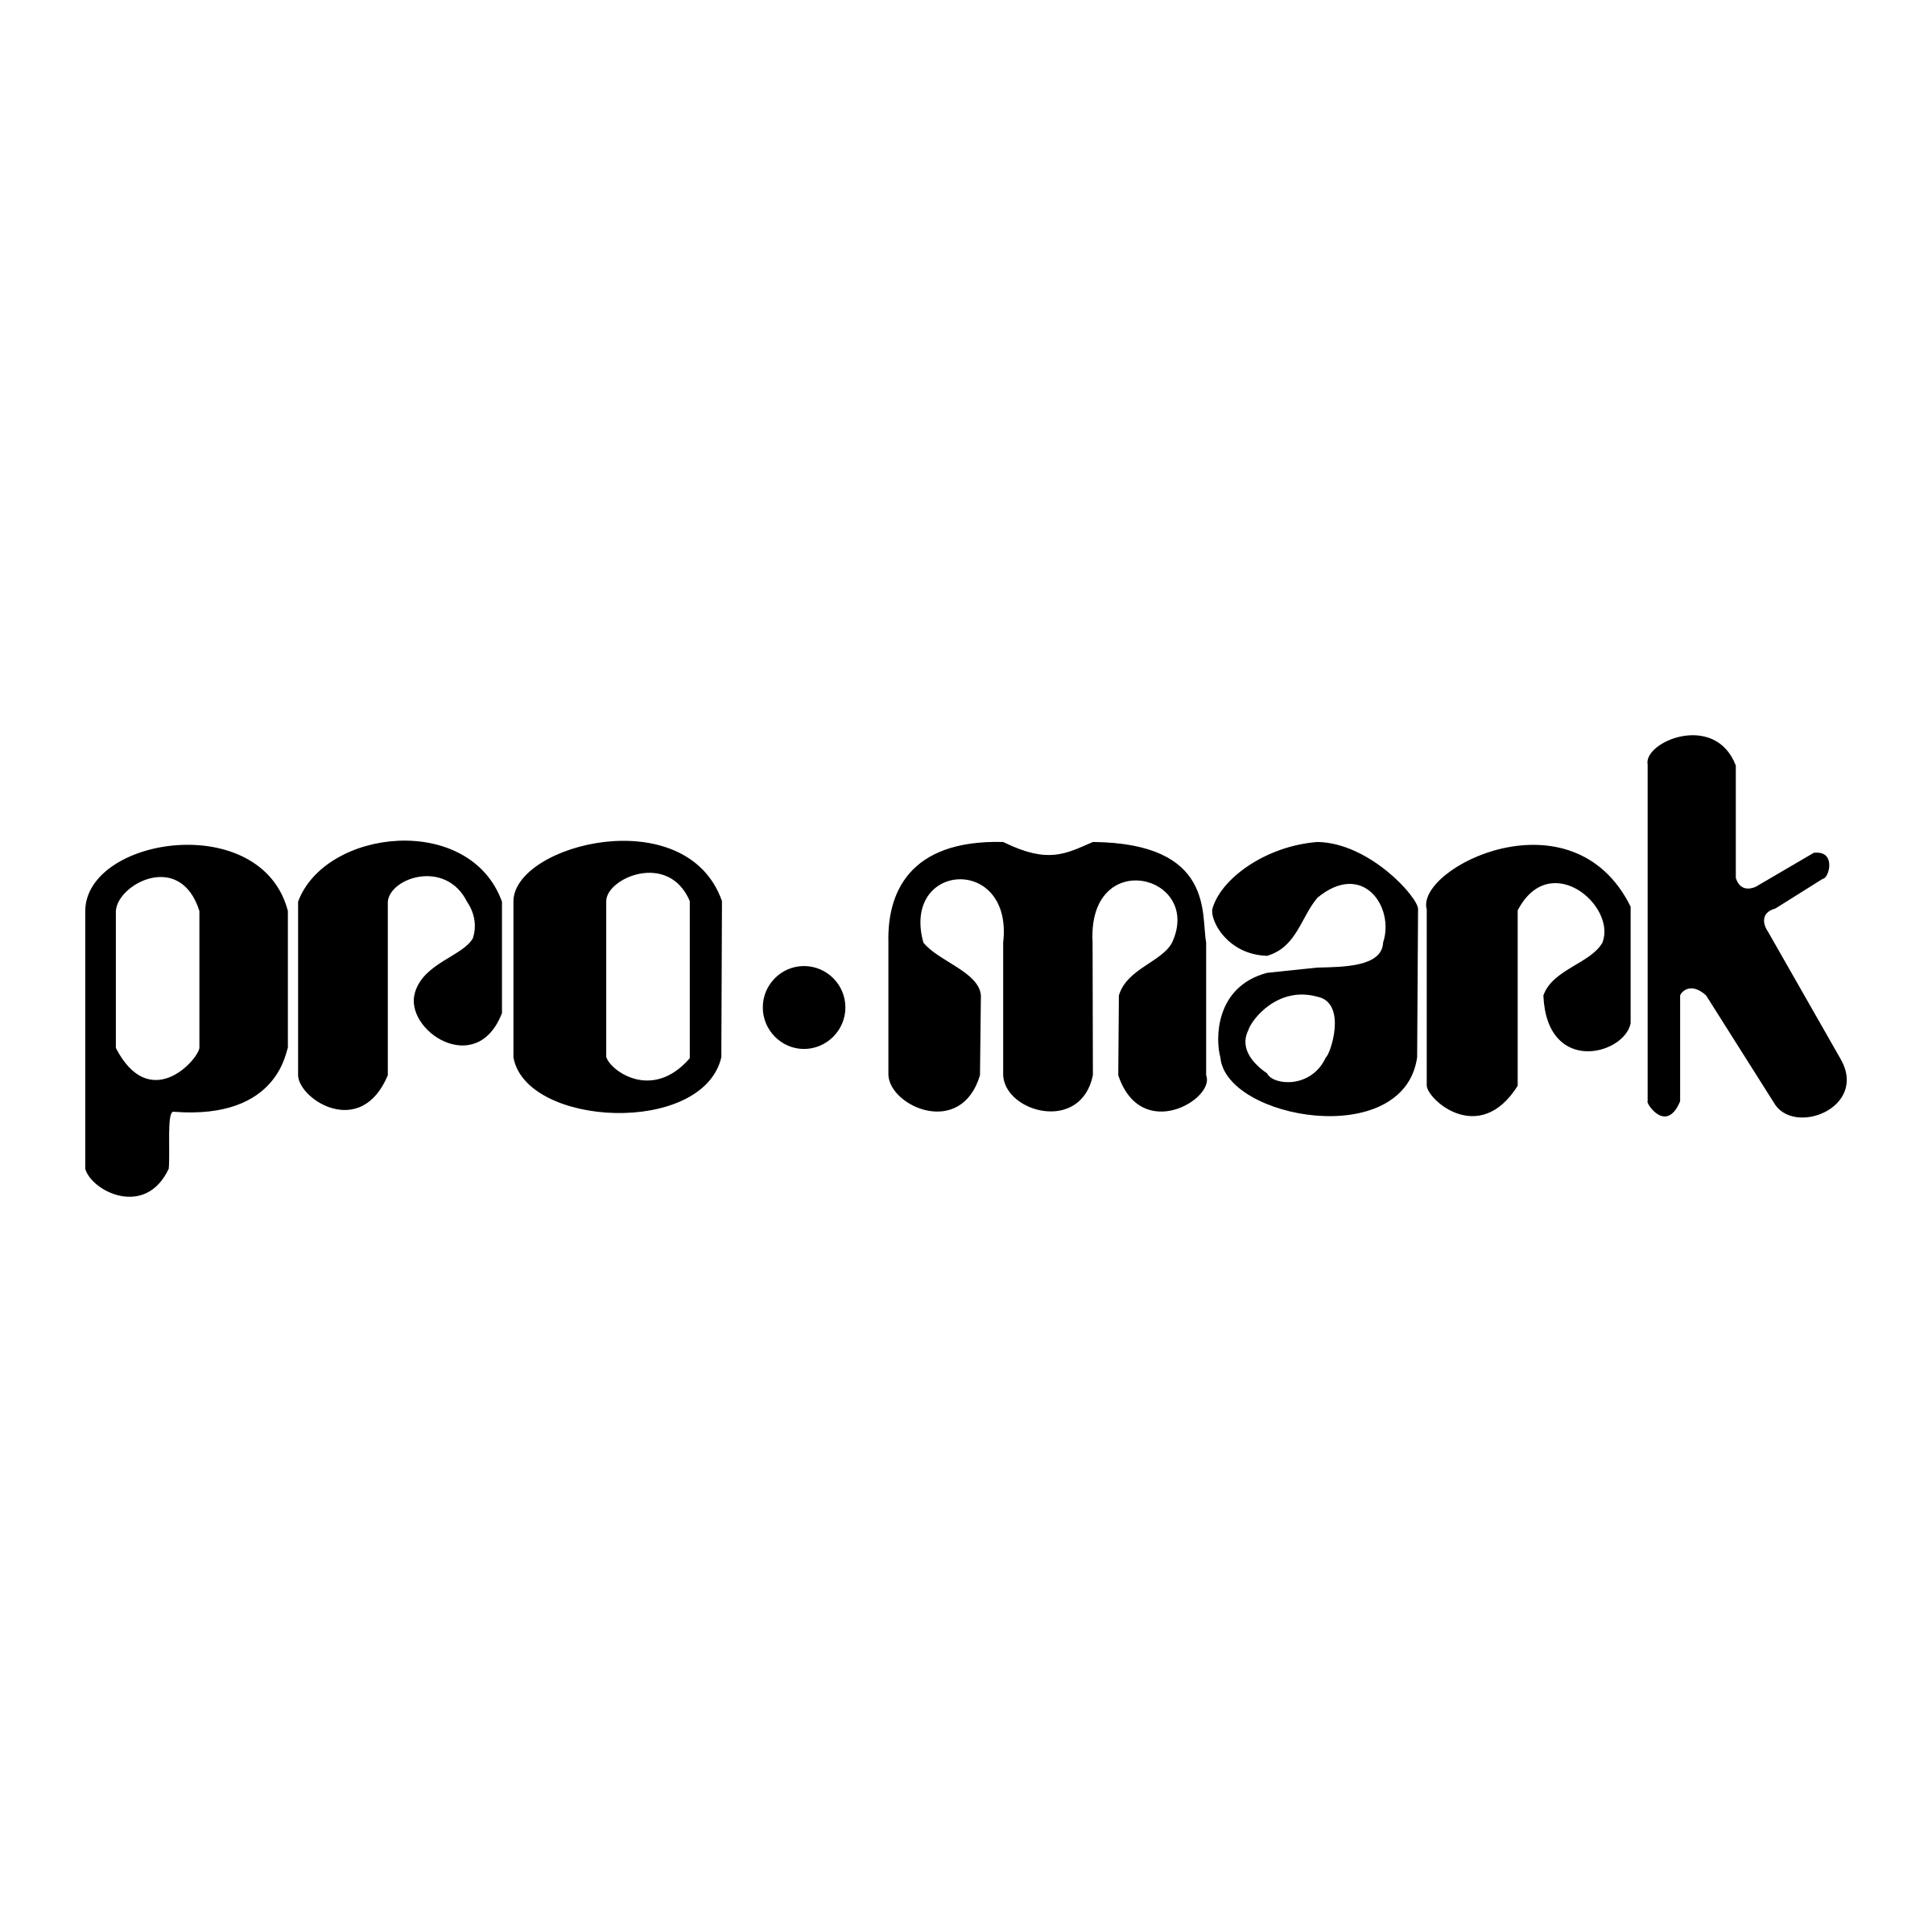 ProMark Logo - Pro Mark Logo PNG Transparent & SVG Vector